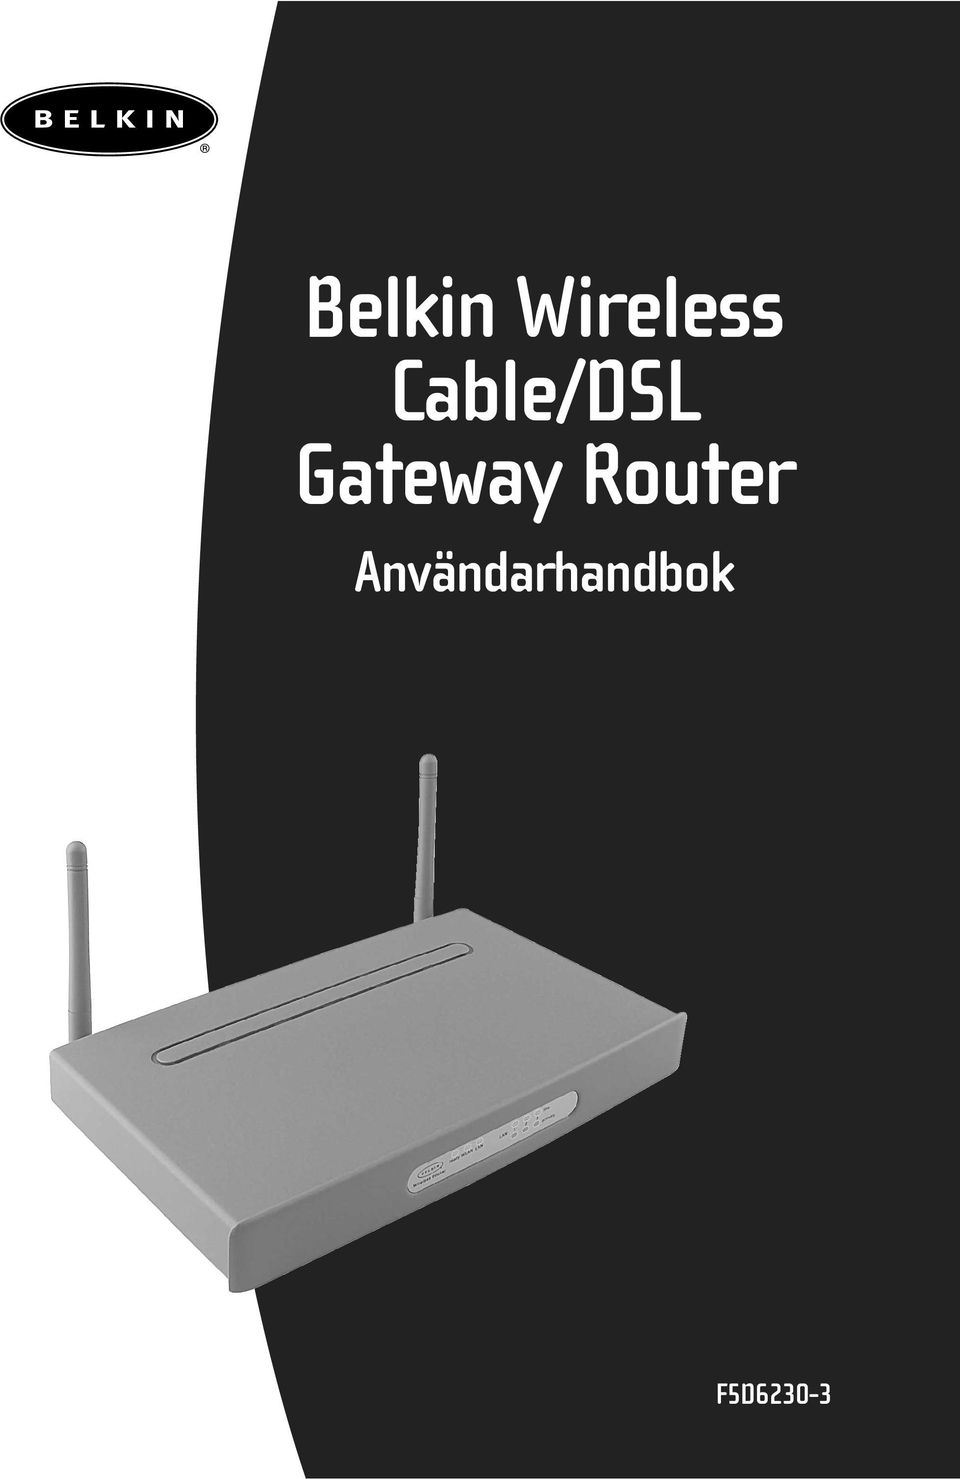 Gateway Router